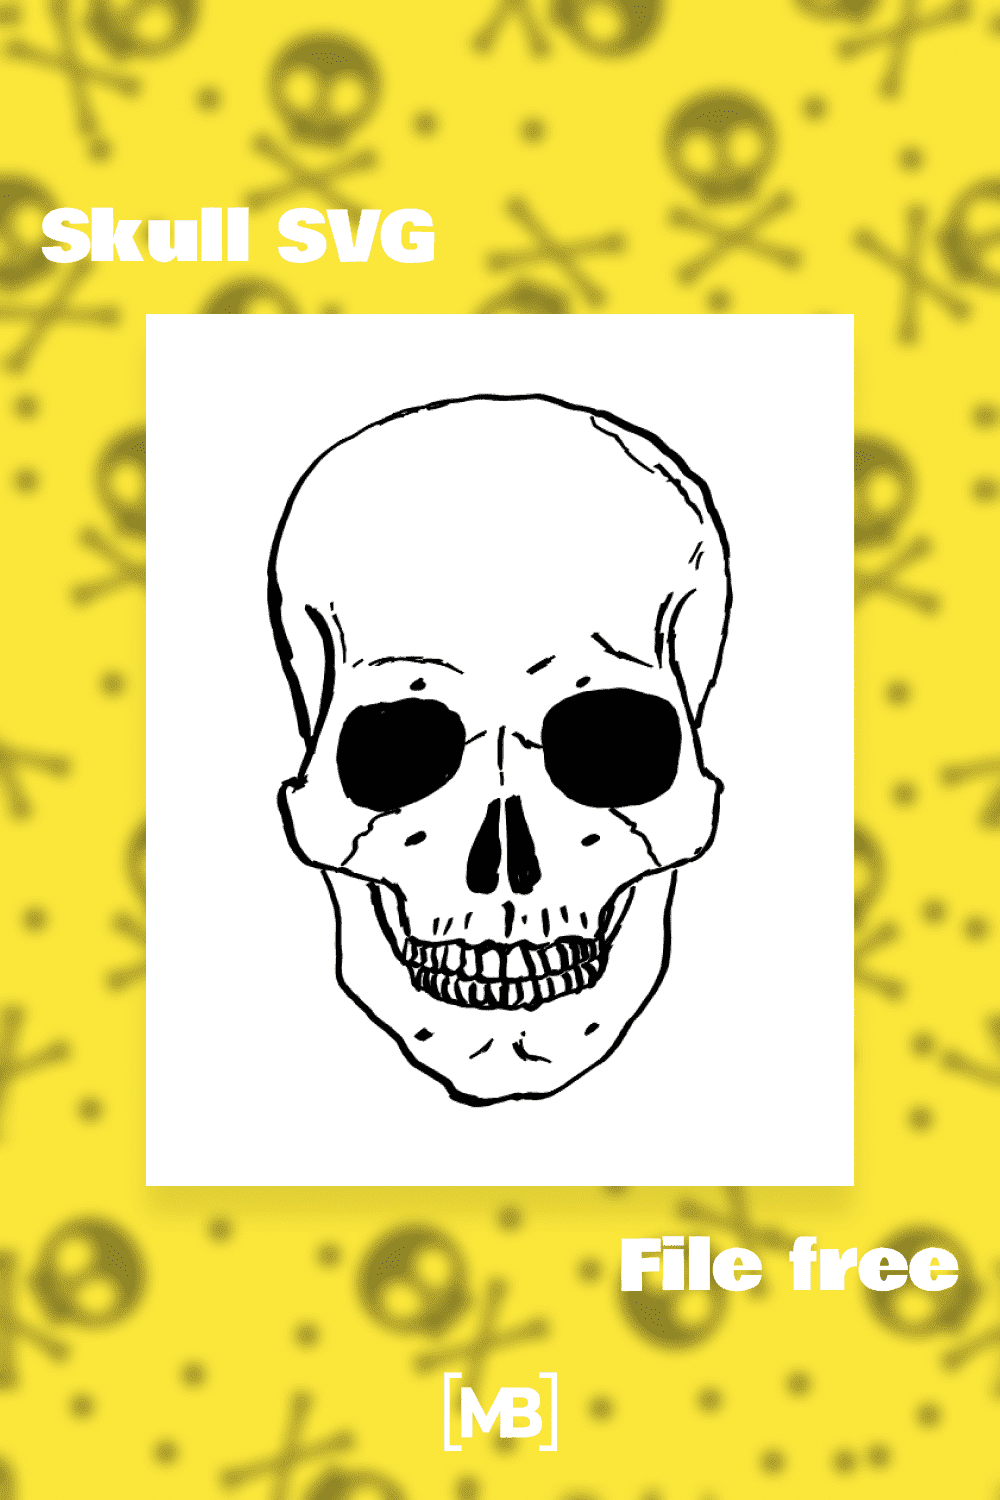 Skull SVG file free.